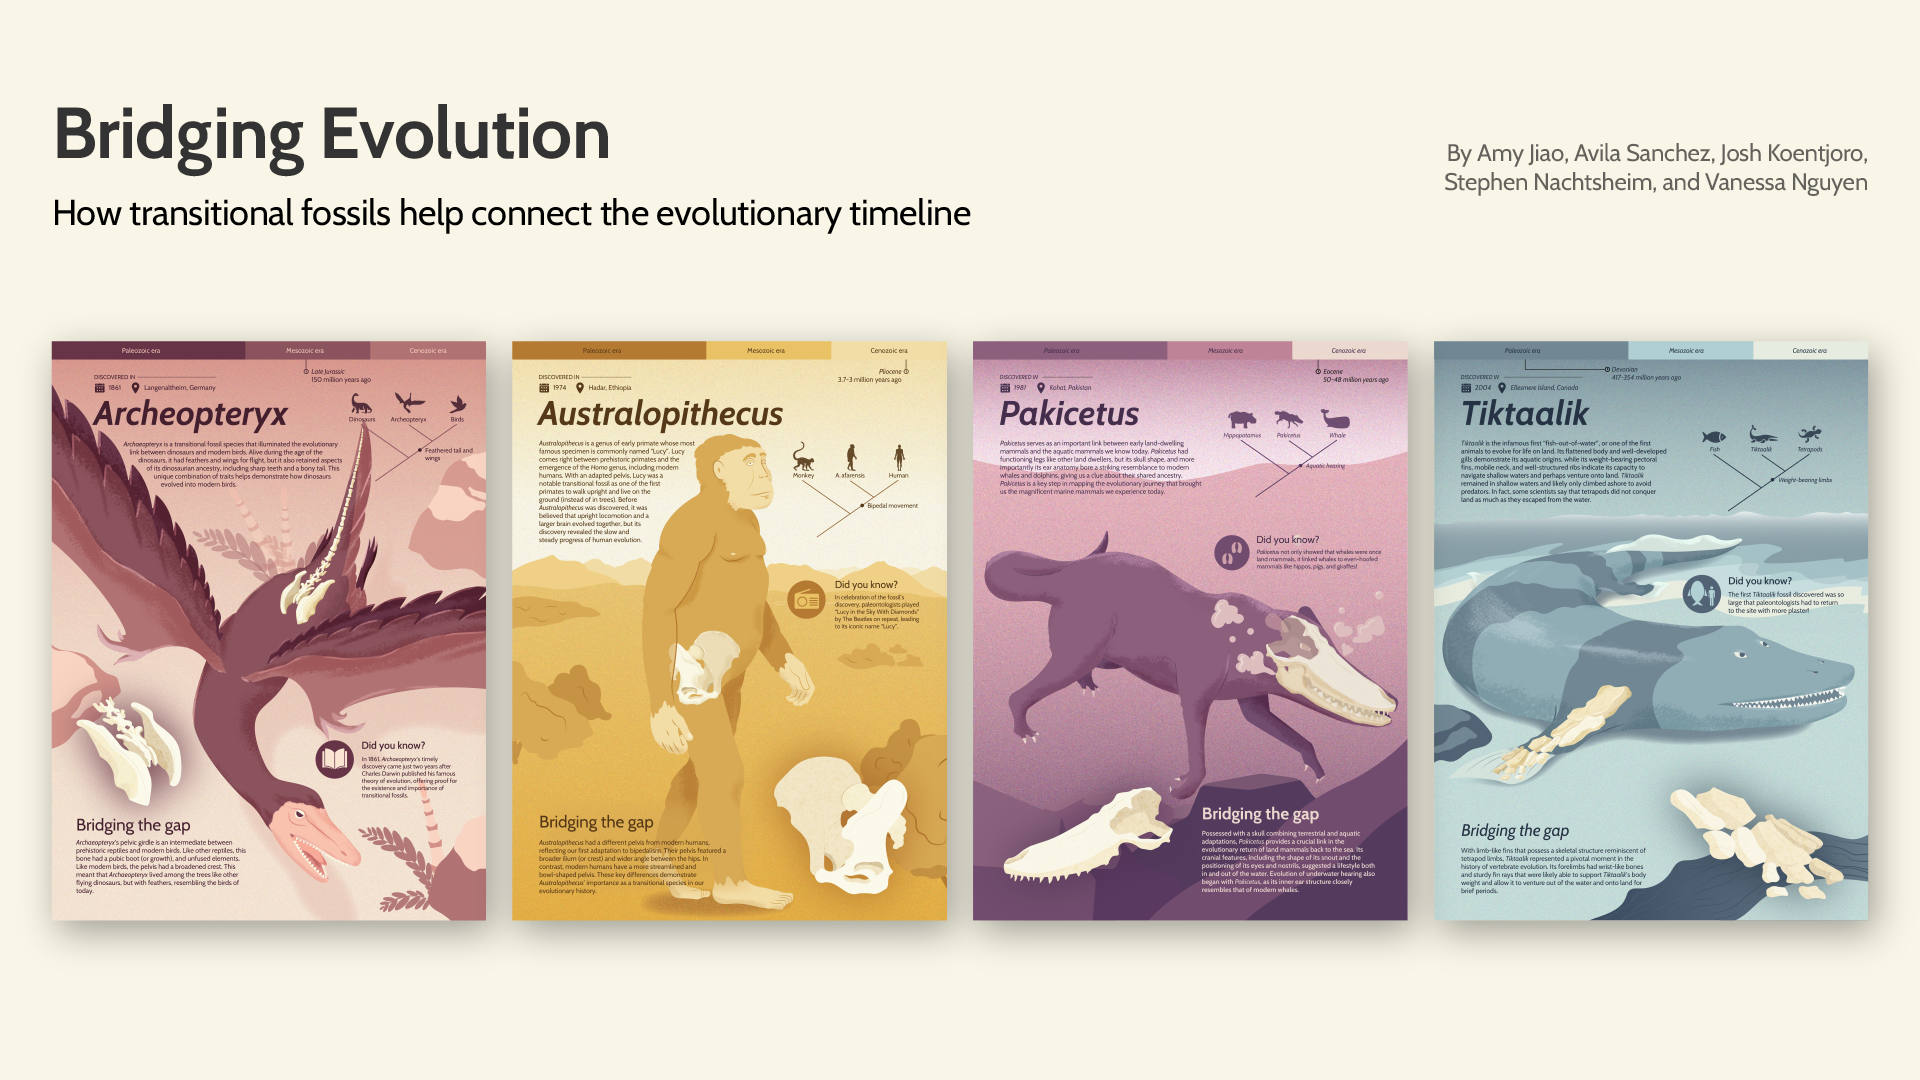 Bridging Evolution posters